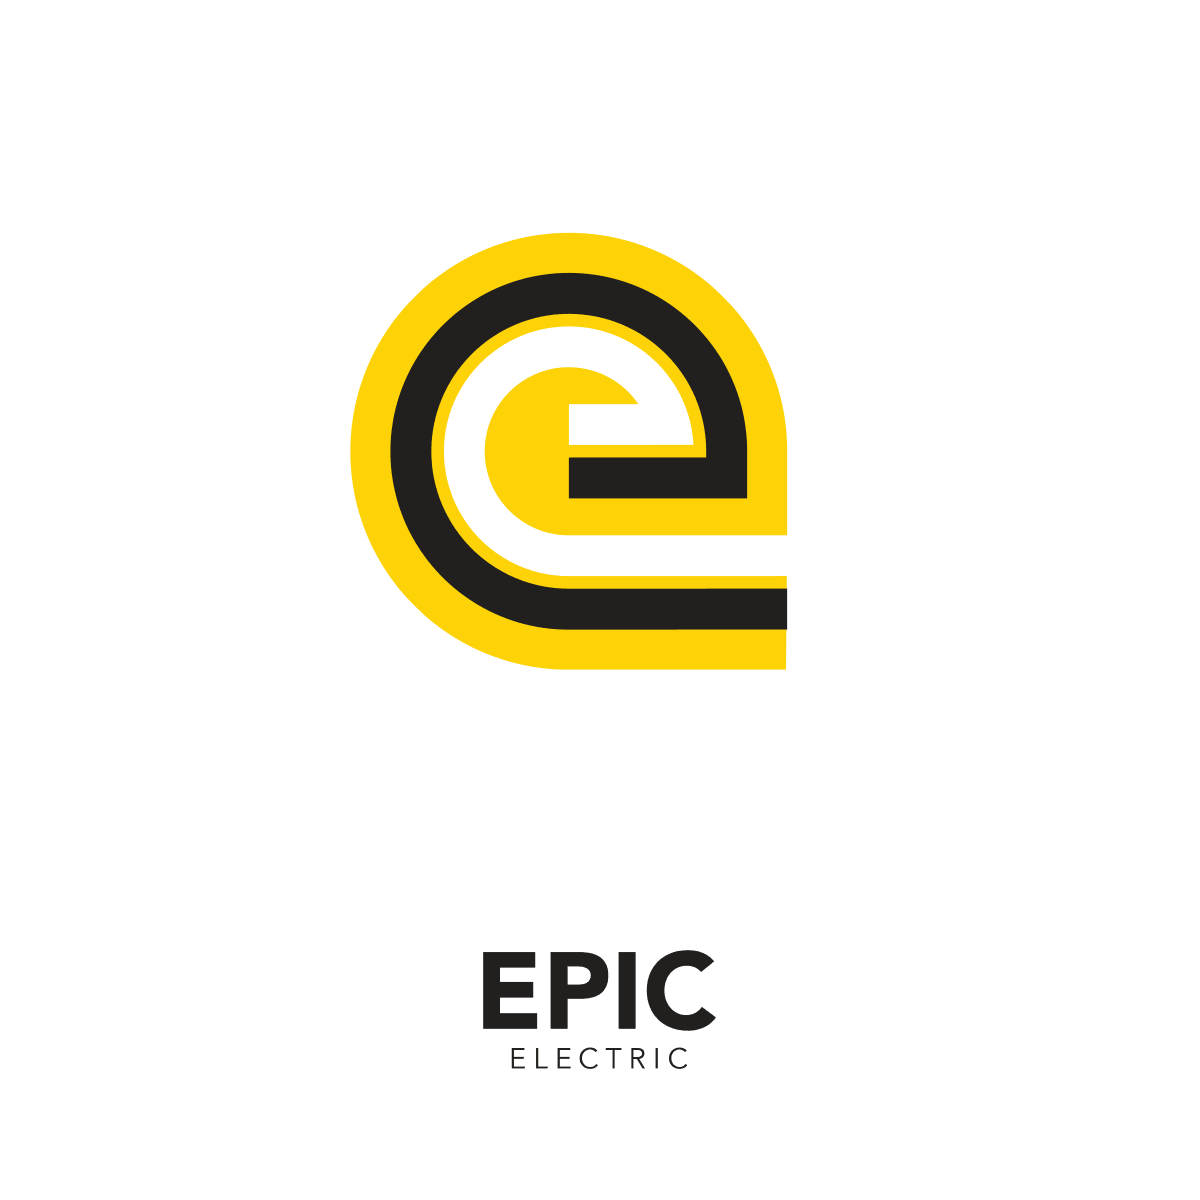 Epic Electric logo concept v1